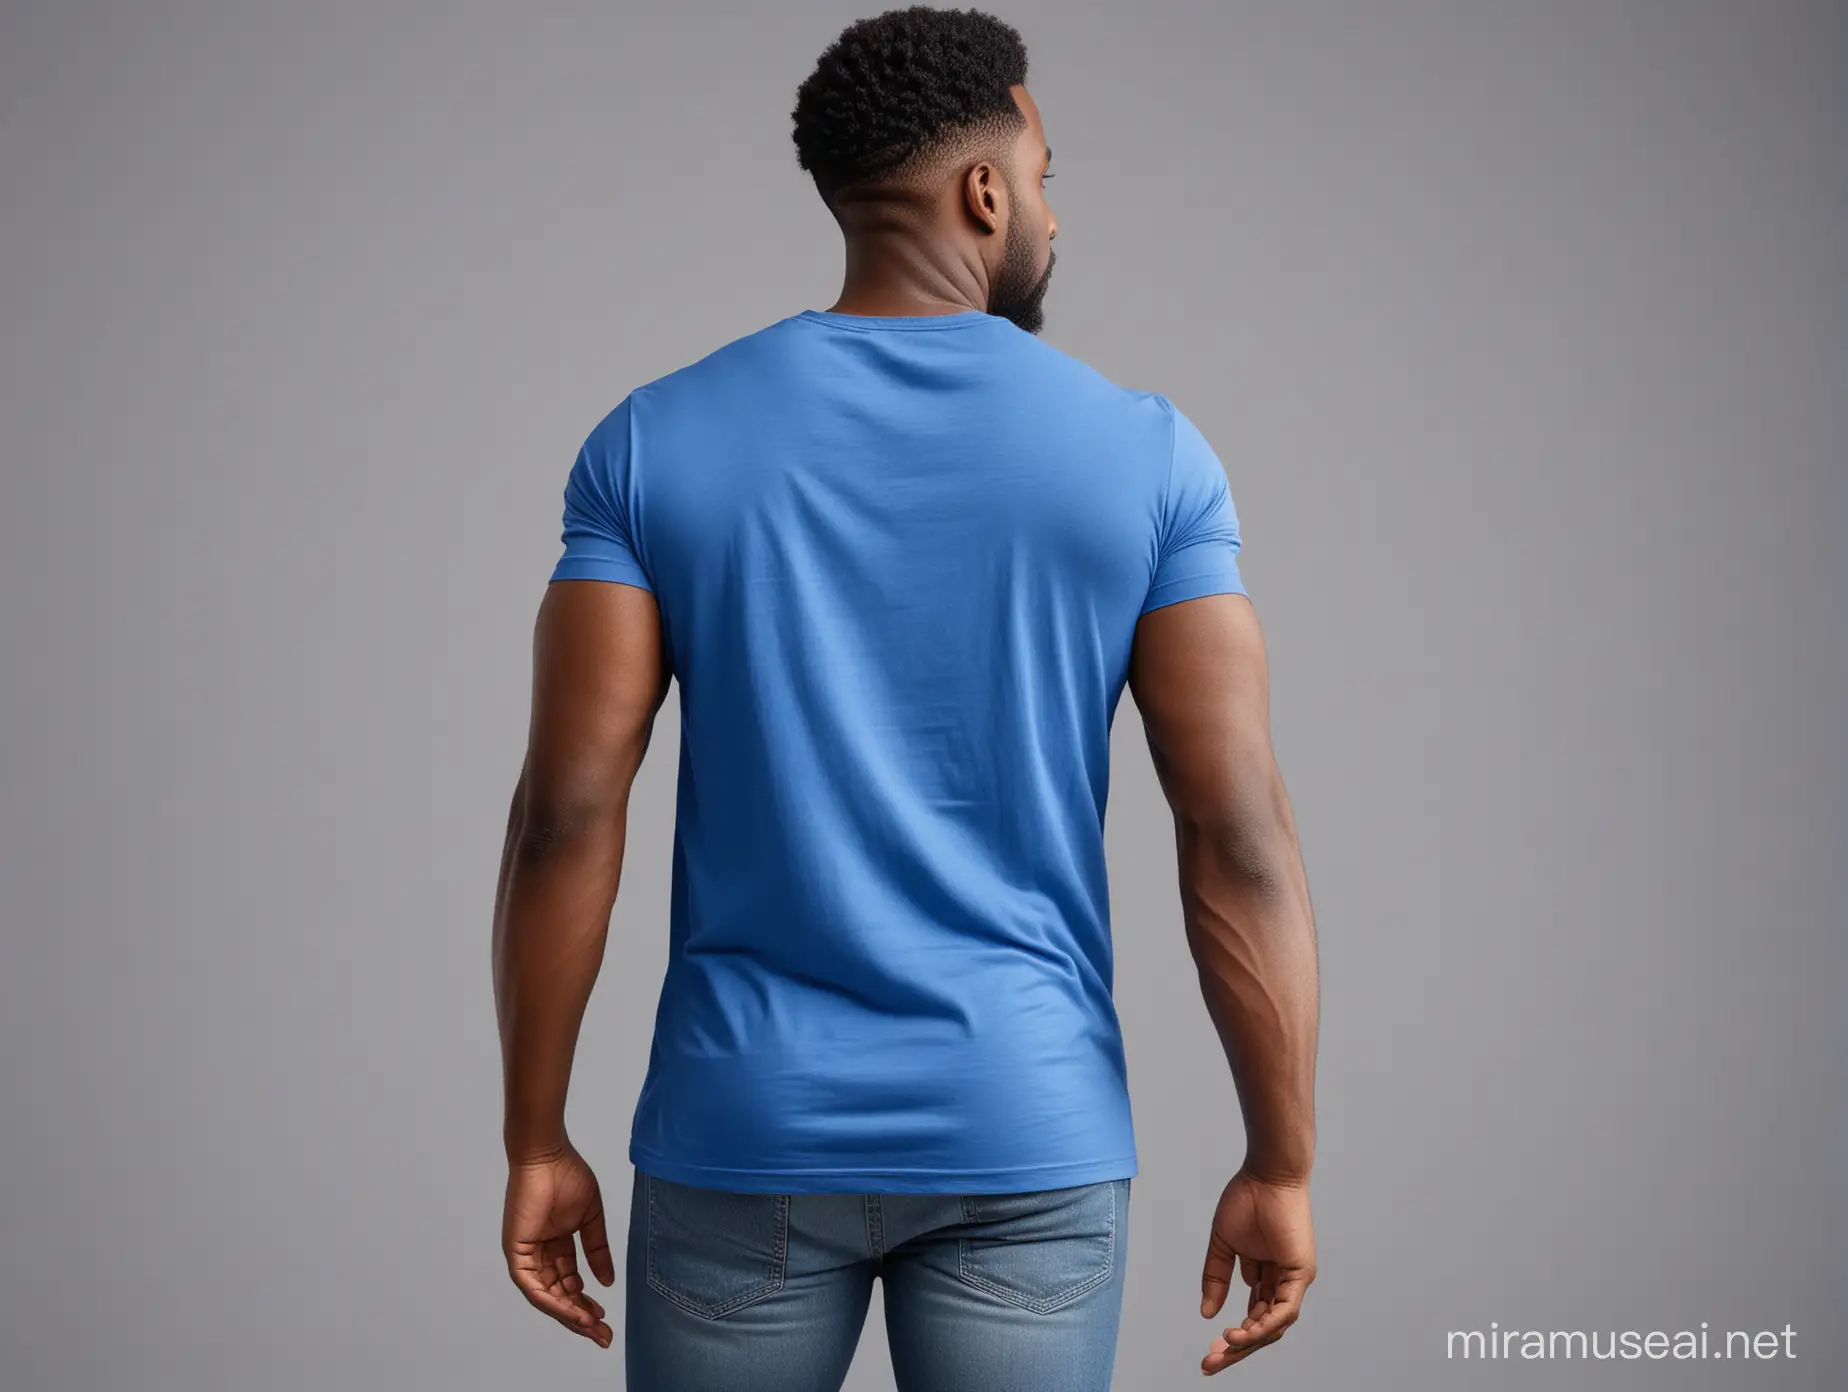  black man model showing the back of his shirt wearing a plain short sleeve vibrant blue t-shirt on 
